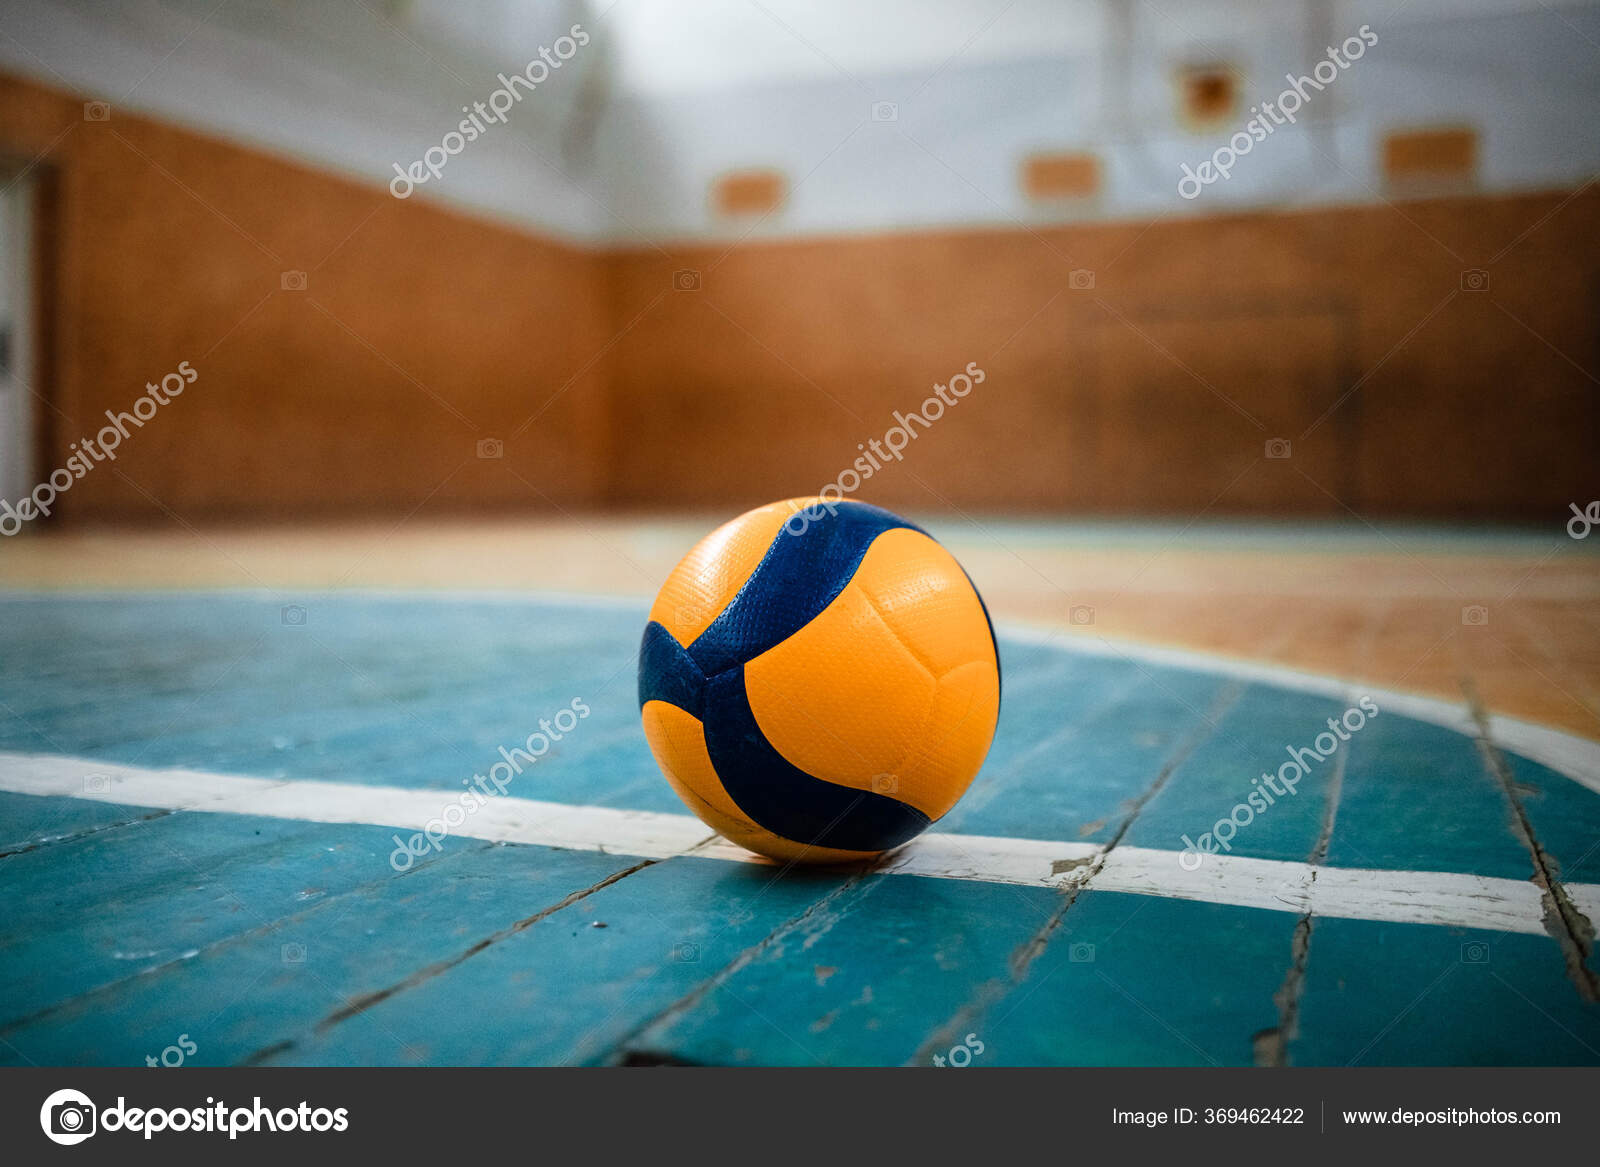 Fotos de Voleibol, Imagens de Voleibol sem royalties